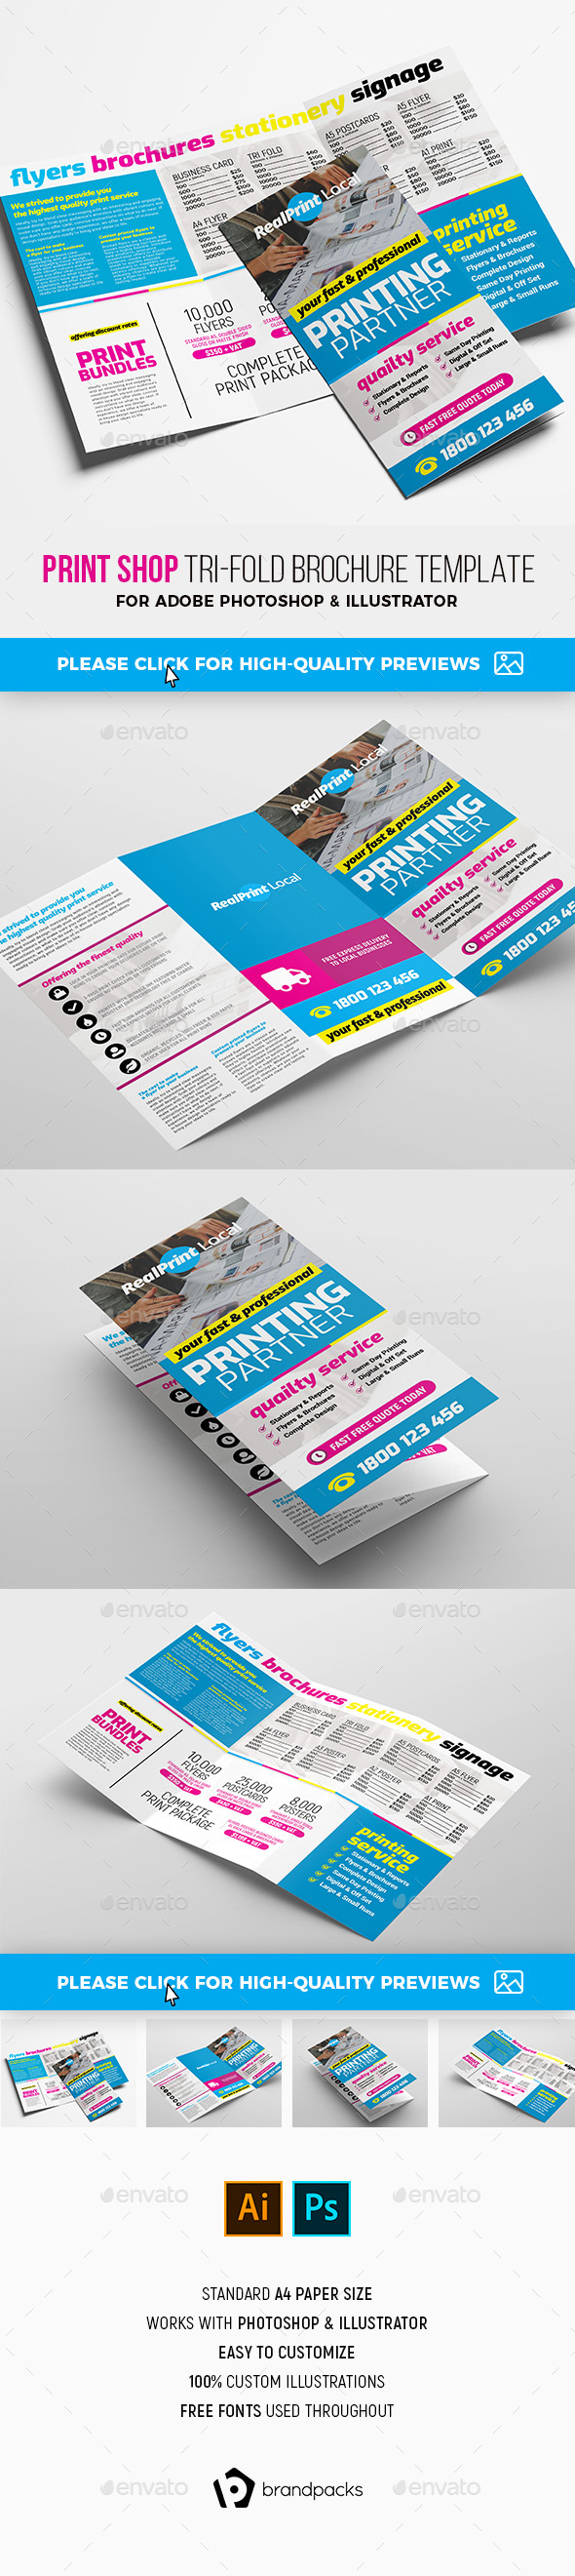 Print Shop Tri-Fold Brochure